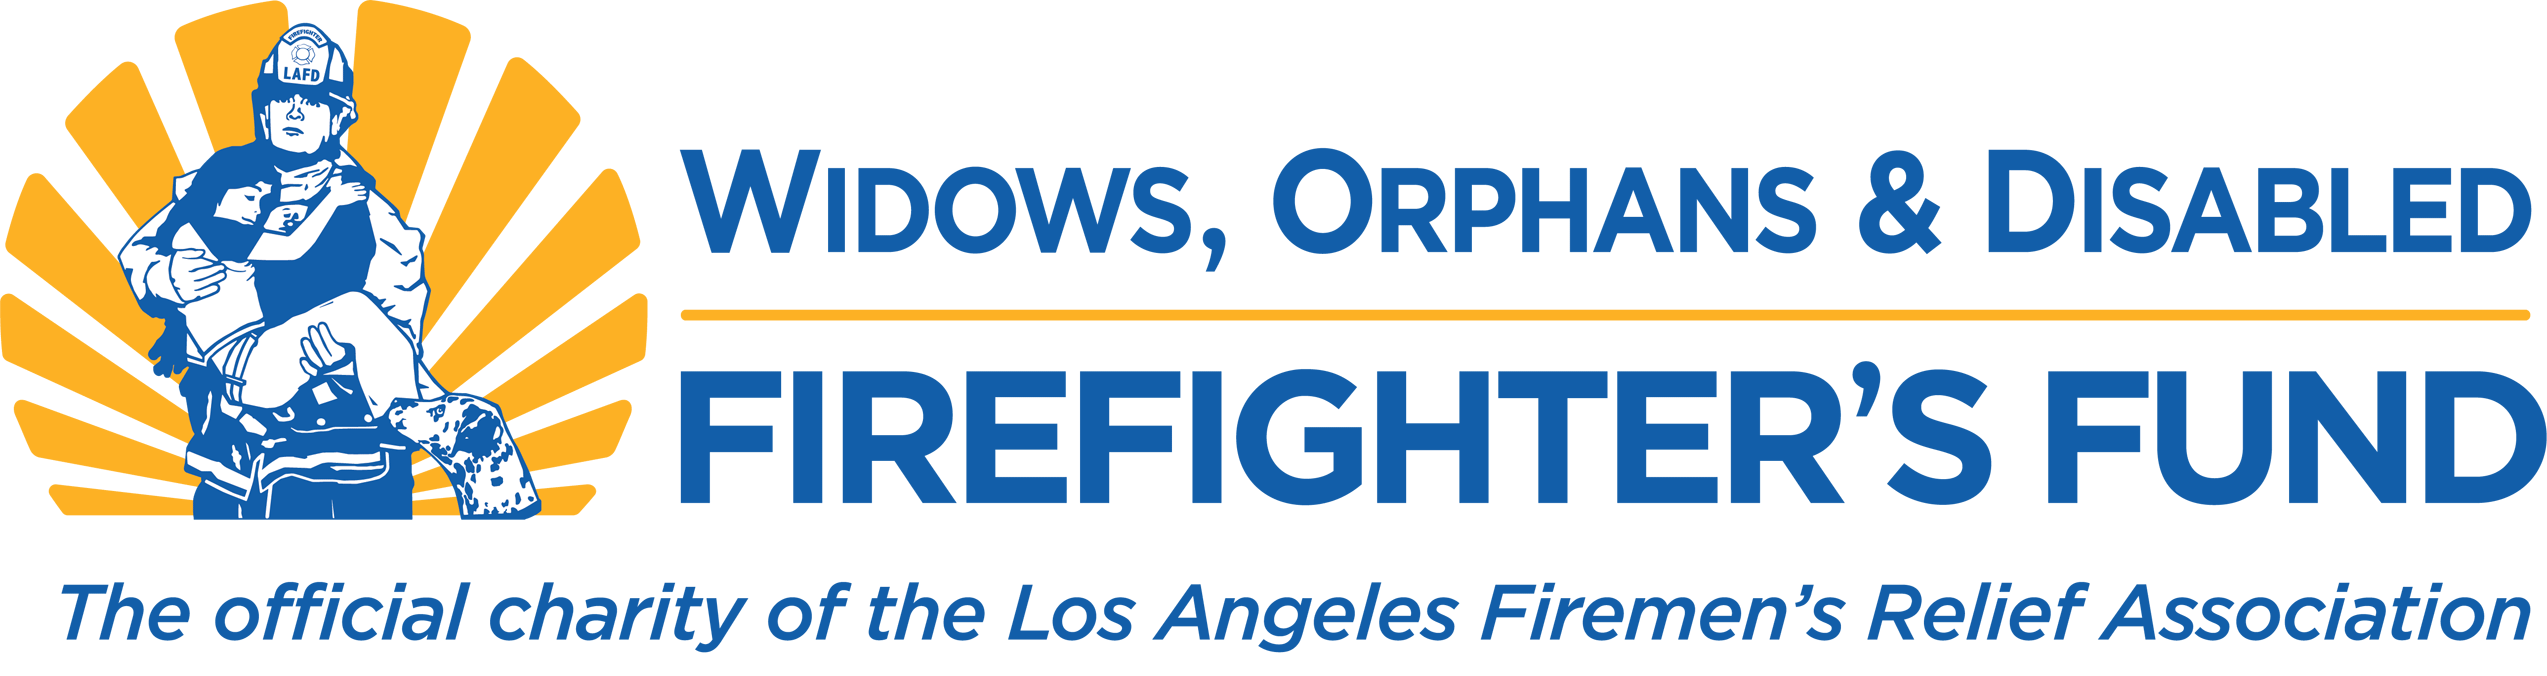 Firefighter's Fund logo